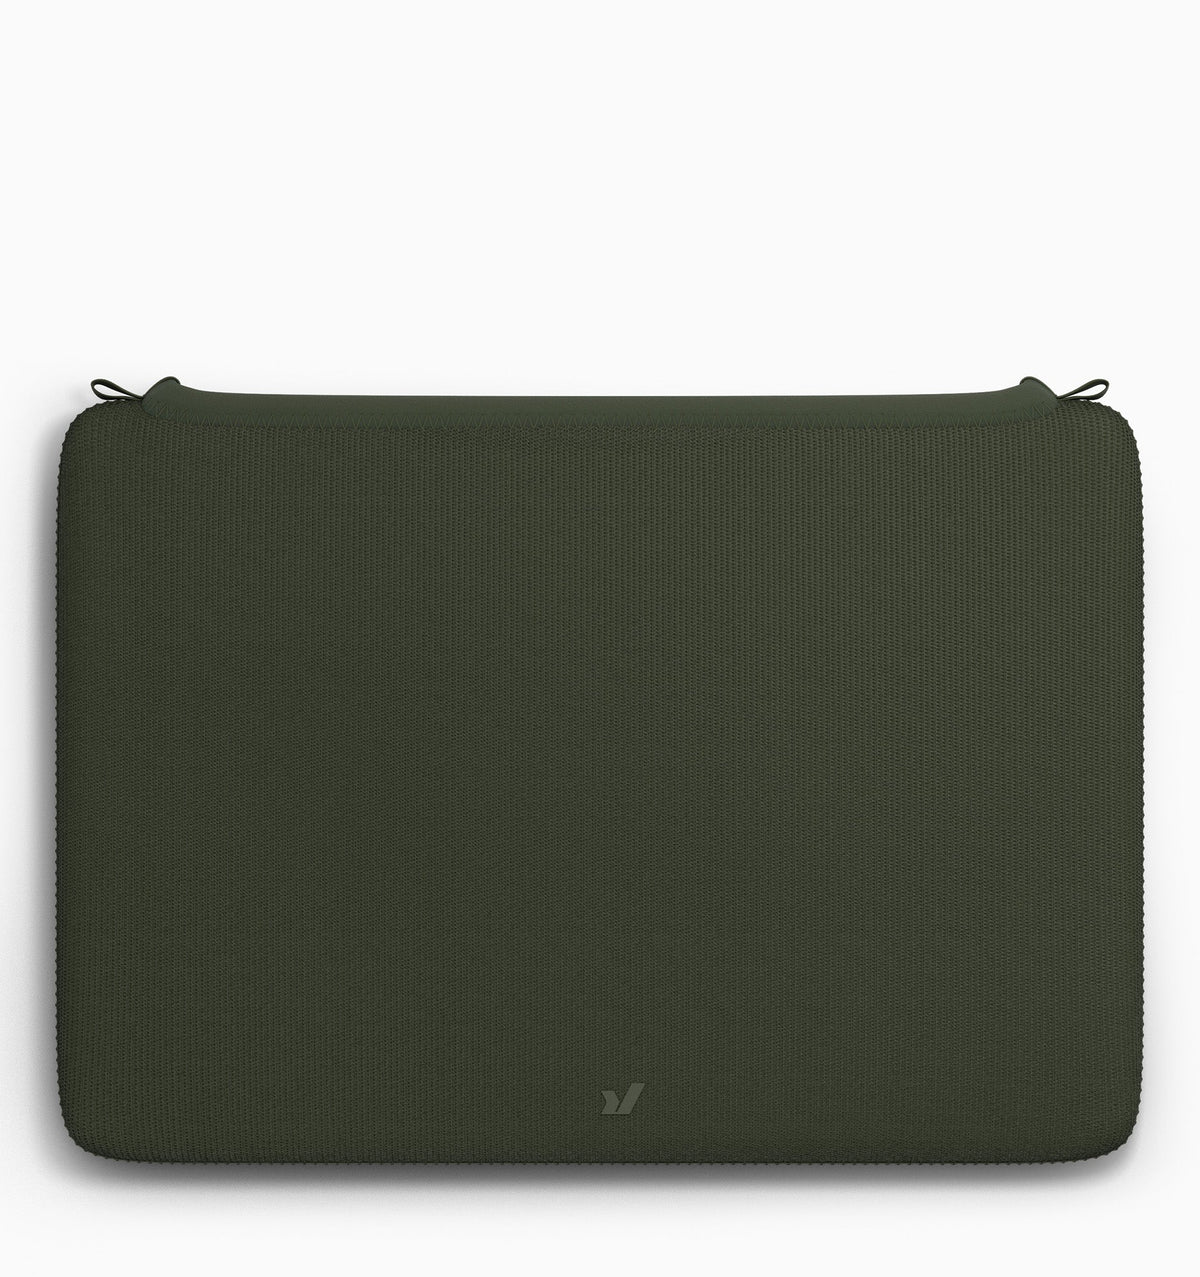 Rushfaster Laptop Sleeve For 14"/16" MacBook Pro Green